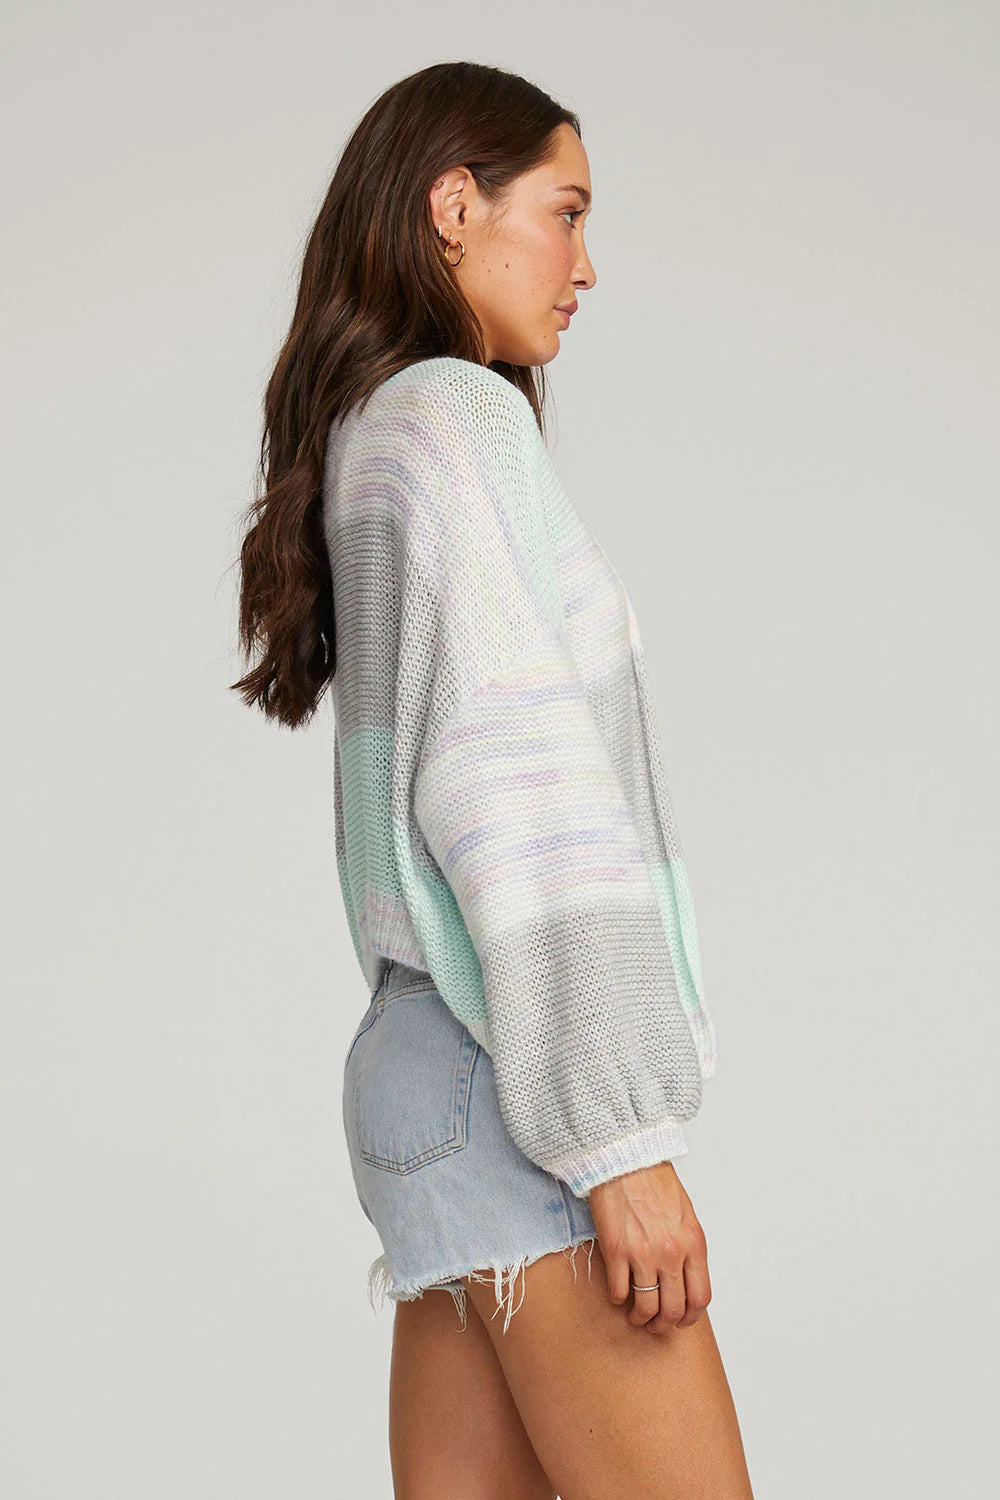 Aden Cardigan Sweater